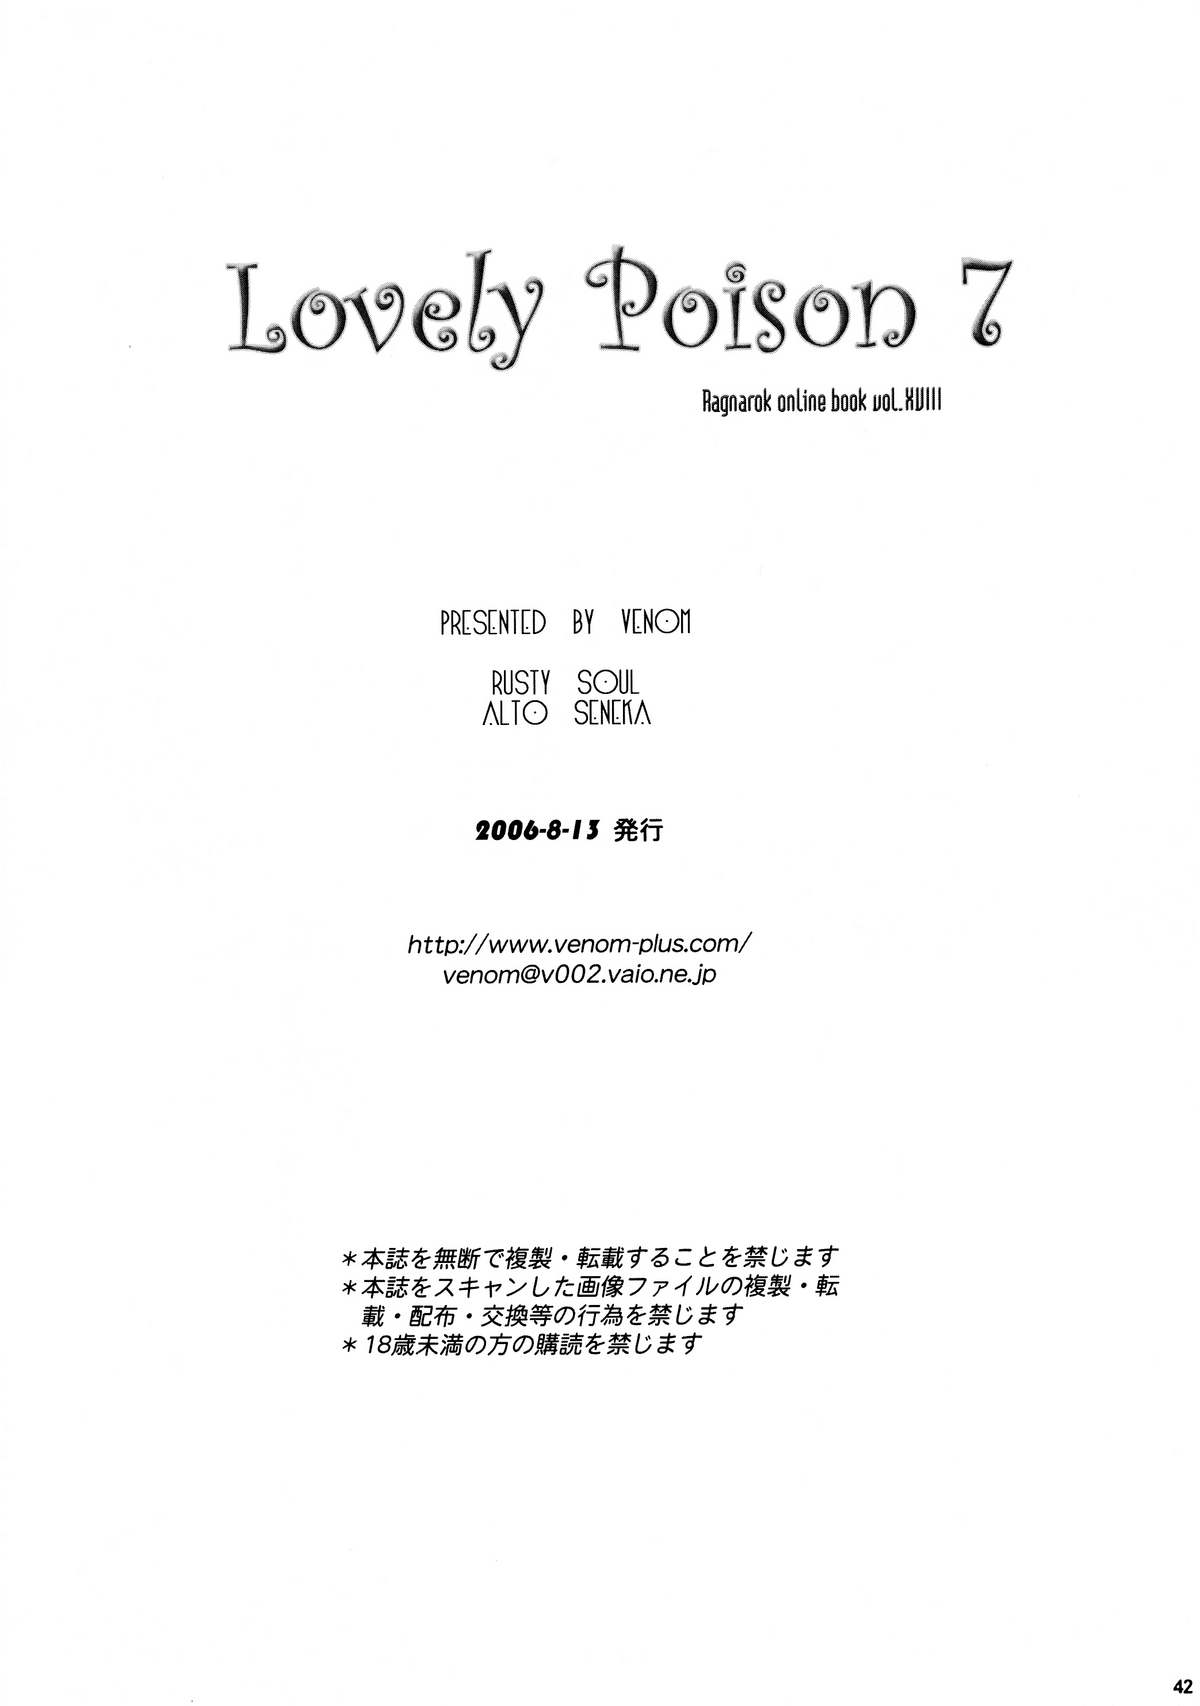 (C70) [VENOM (或十せねか、Rusty Soul)] Lovely Poison 7 (ラグナロクオンライン)